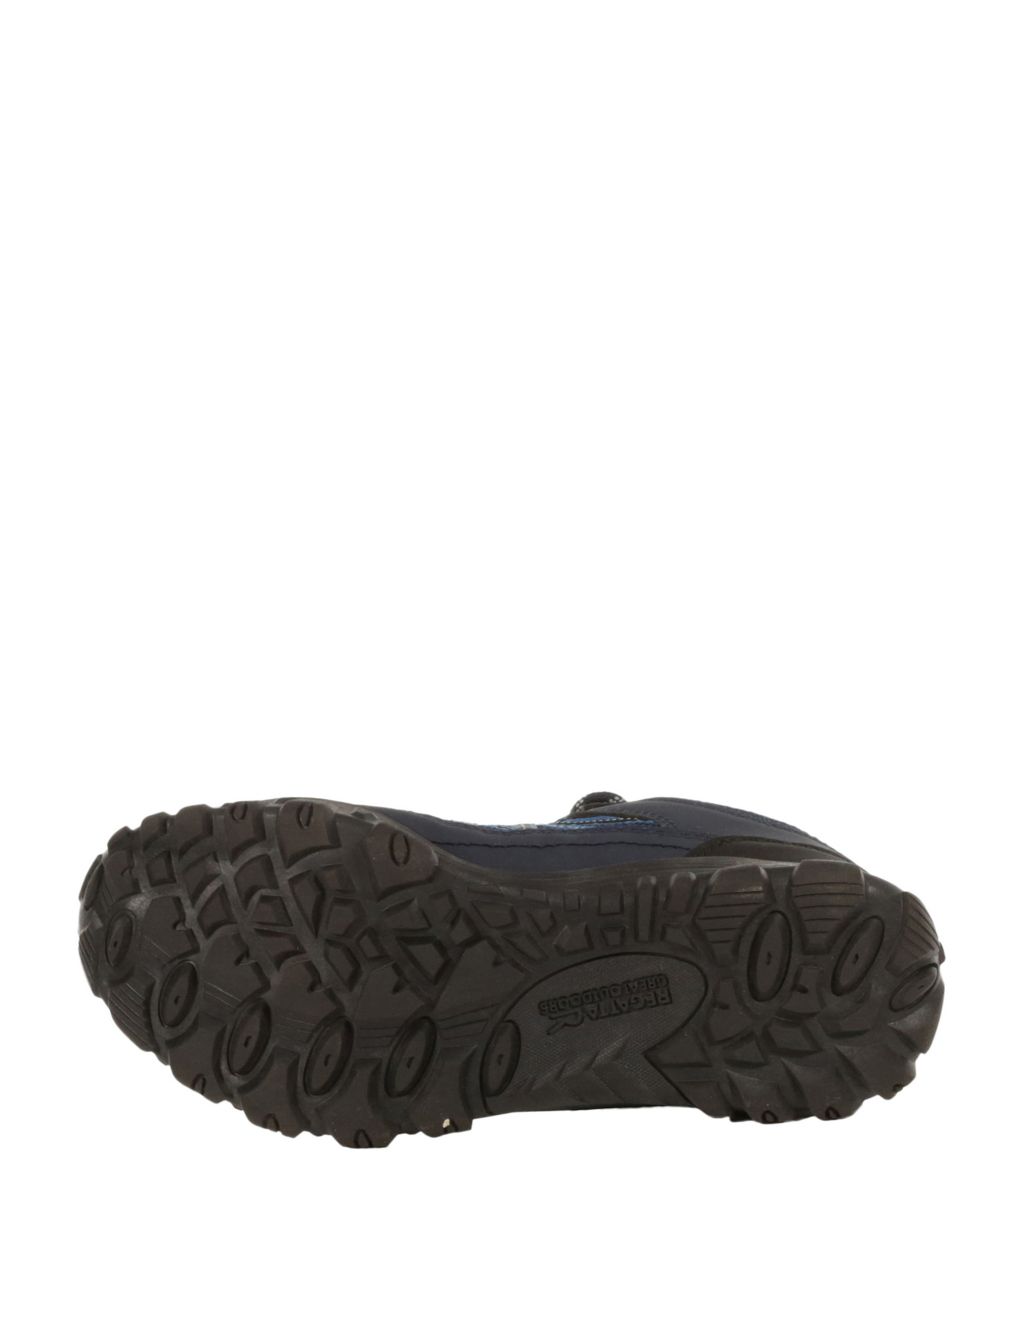 Lady Edgepoint Waterproof Walking Shoes image 5